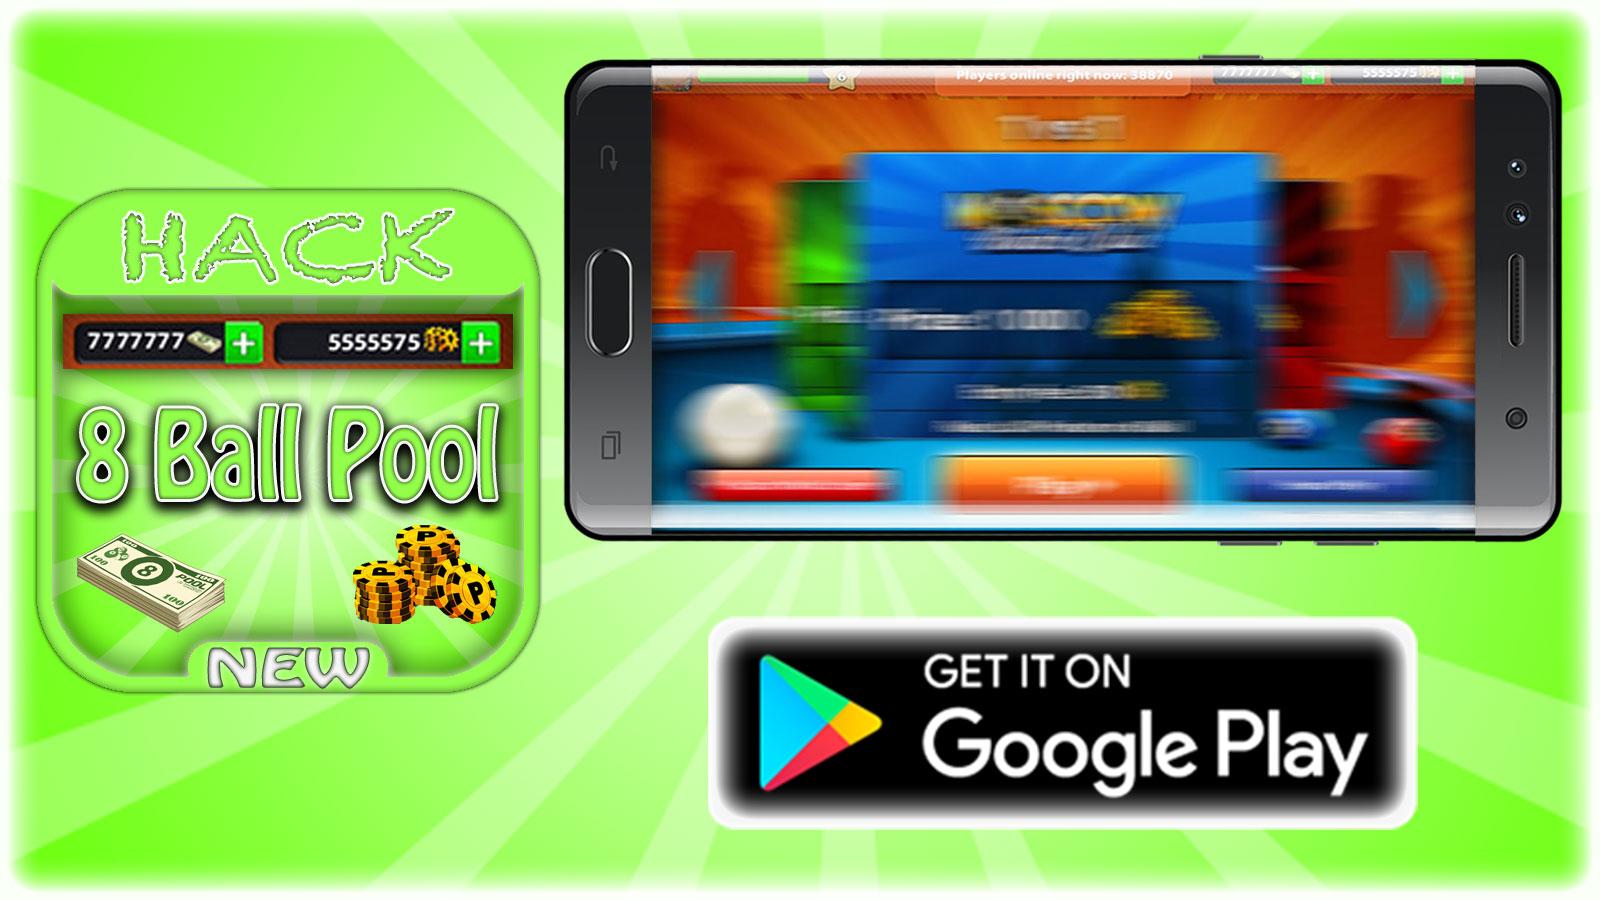 Hack For 8 Ball Pool Game App Joke - Prank. for Android ... - 